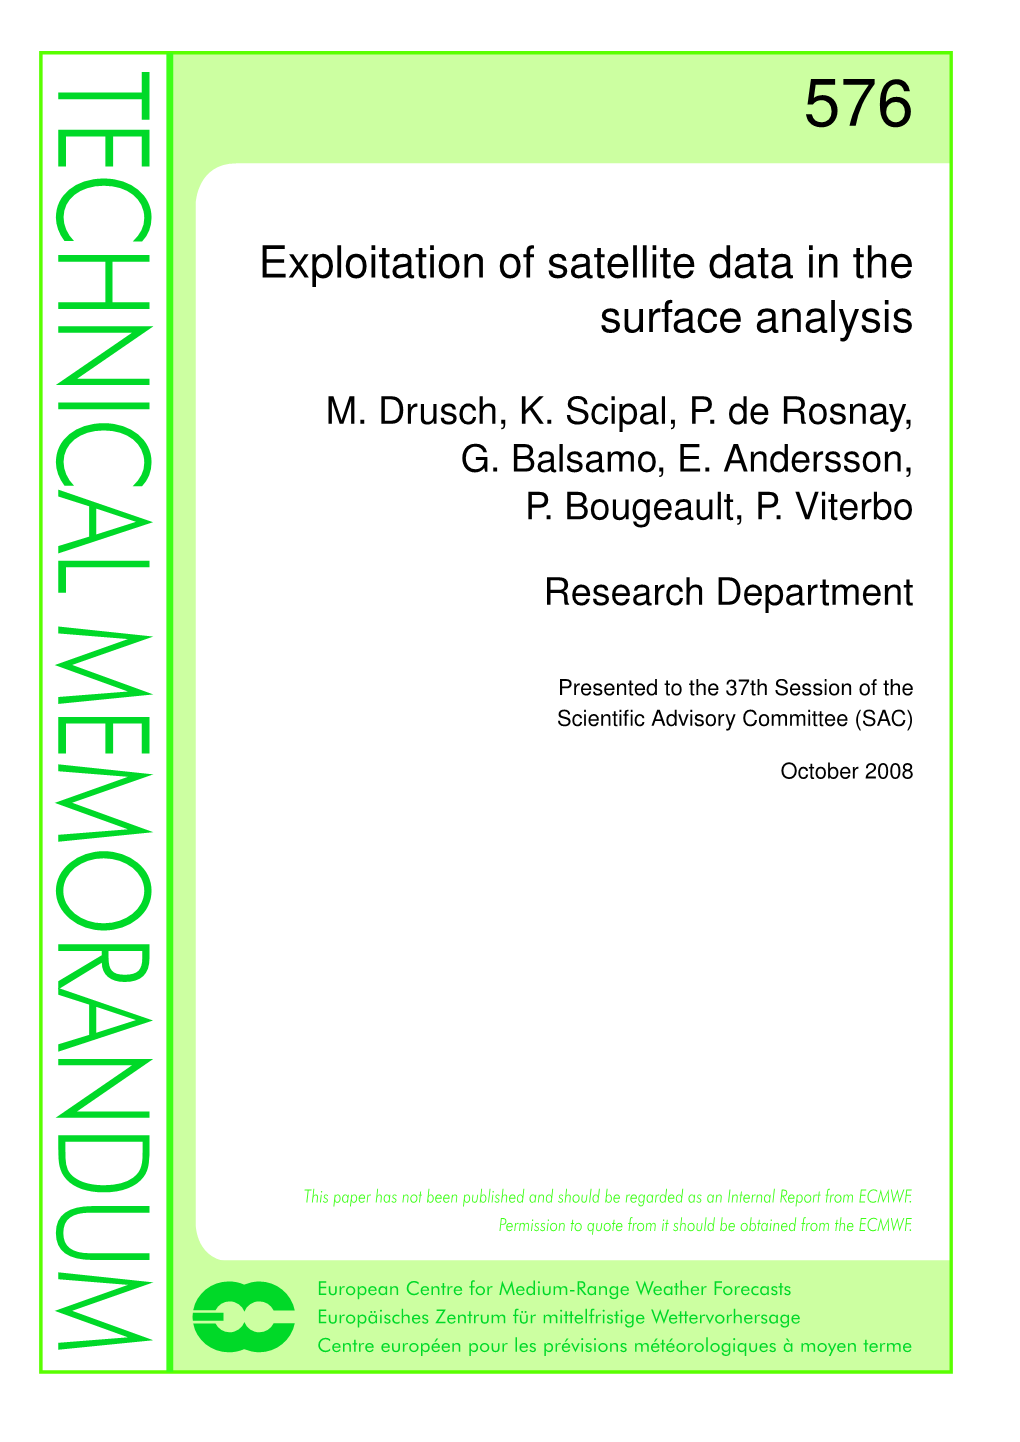 Exploitation of Satellite Data in the Surface Analysis